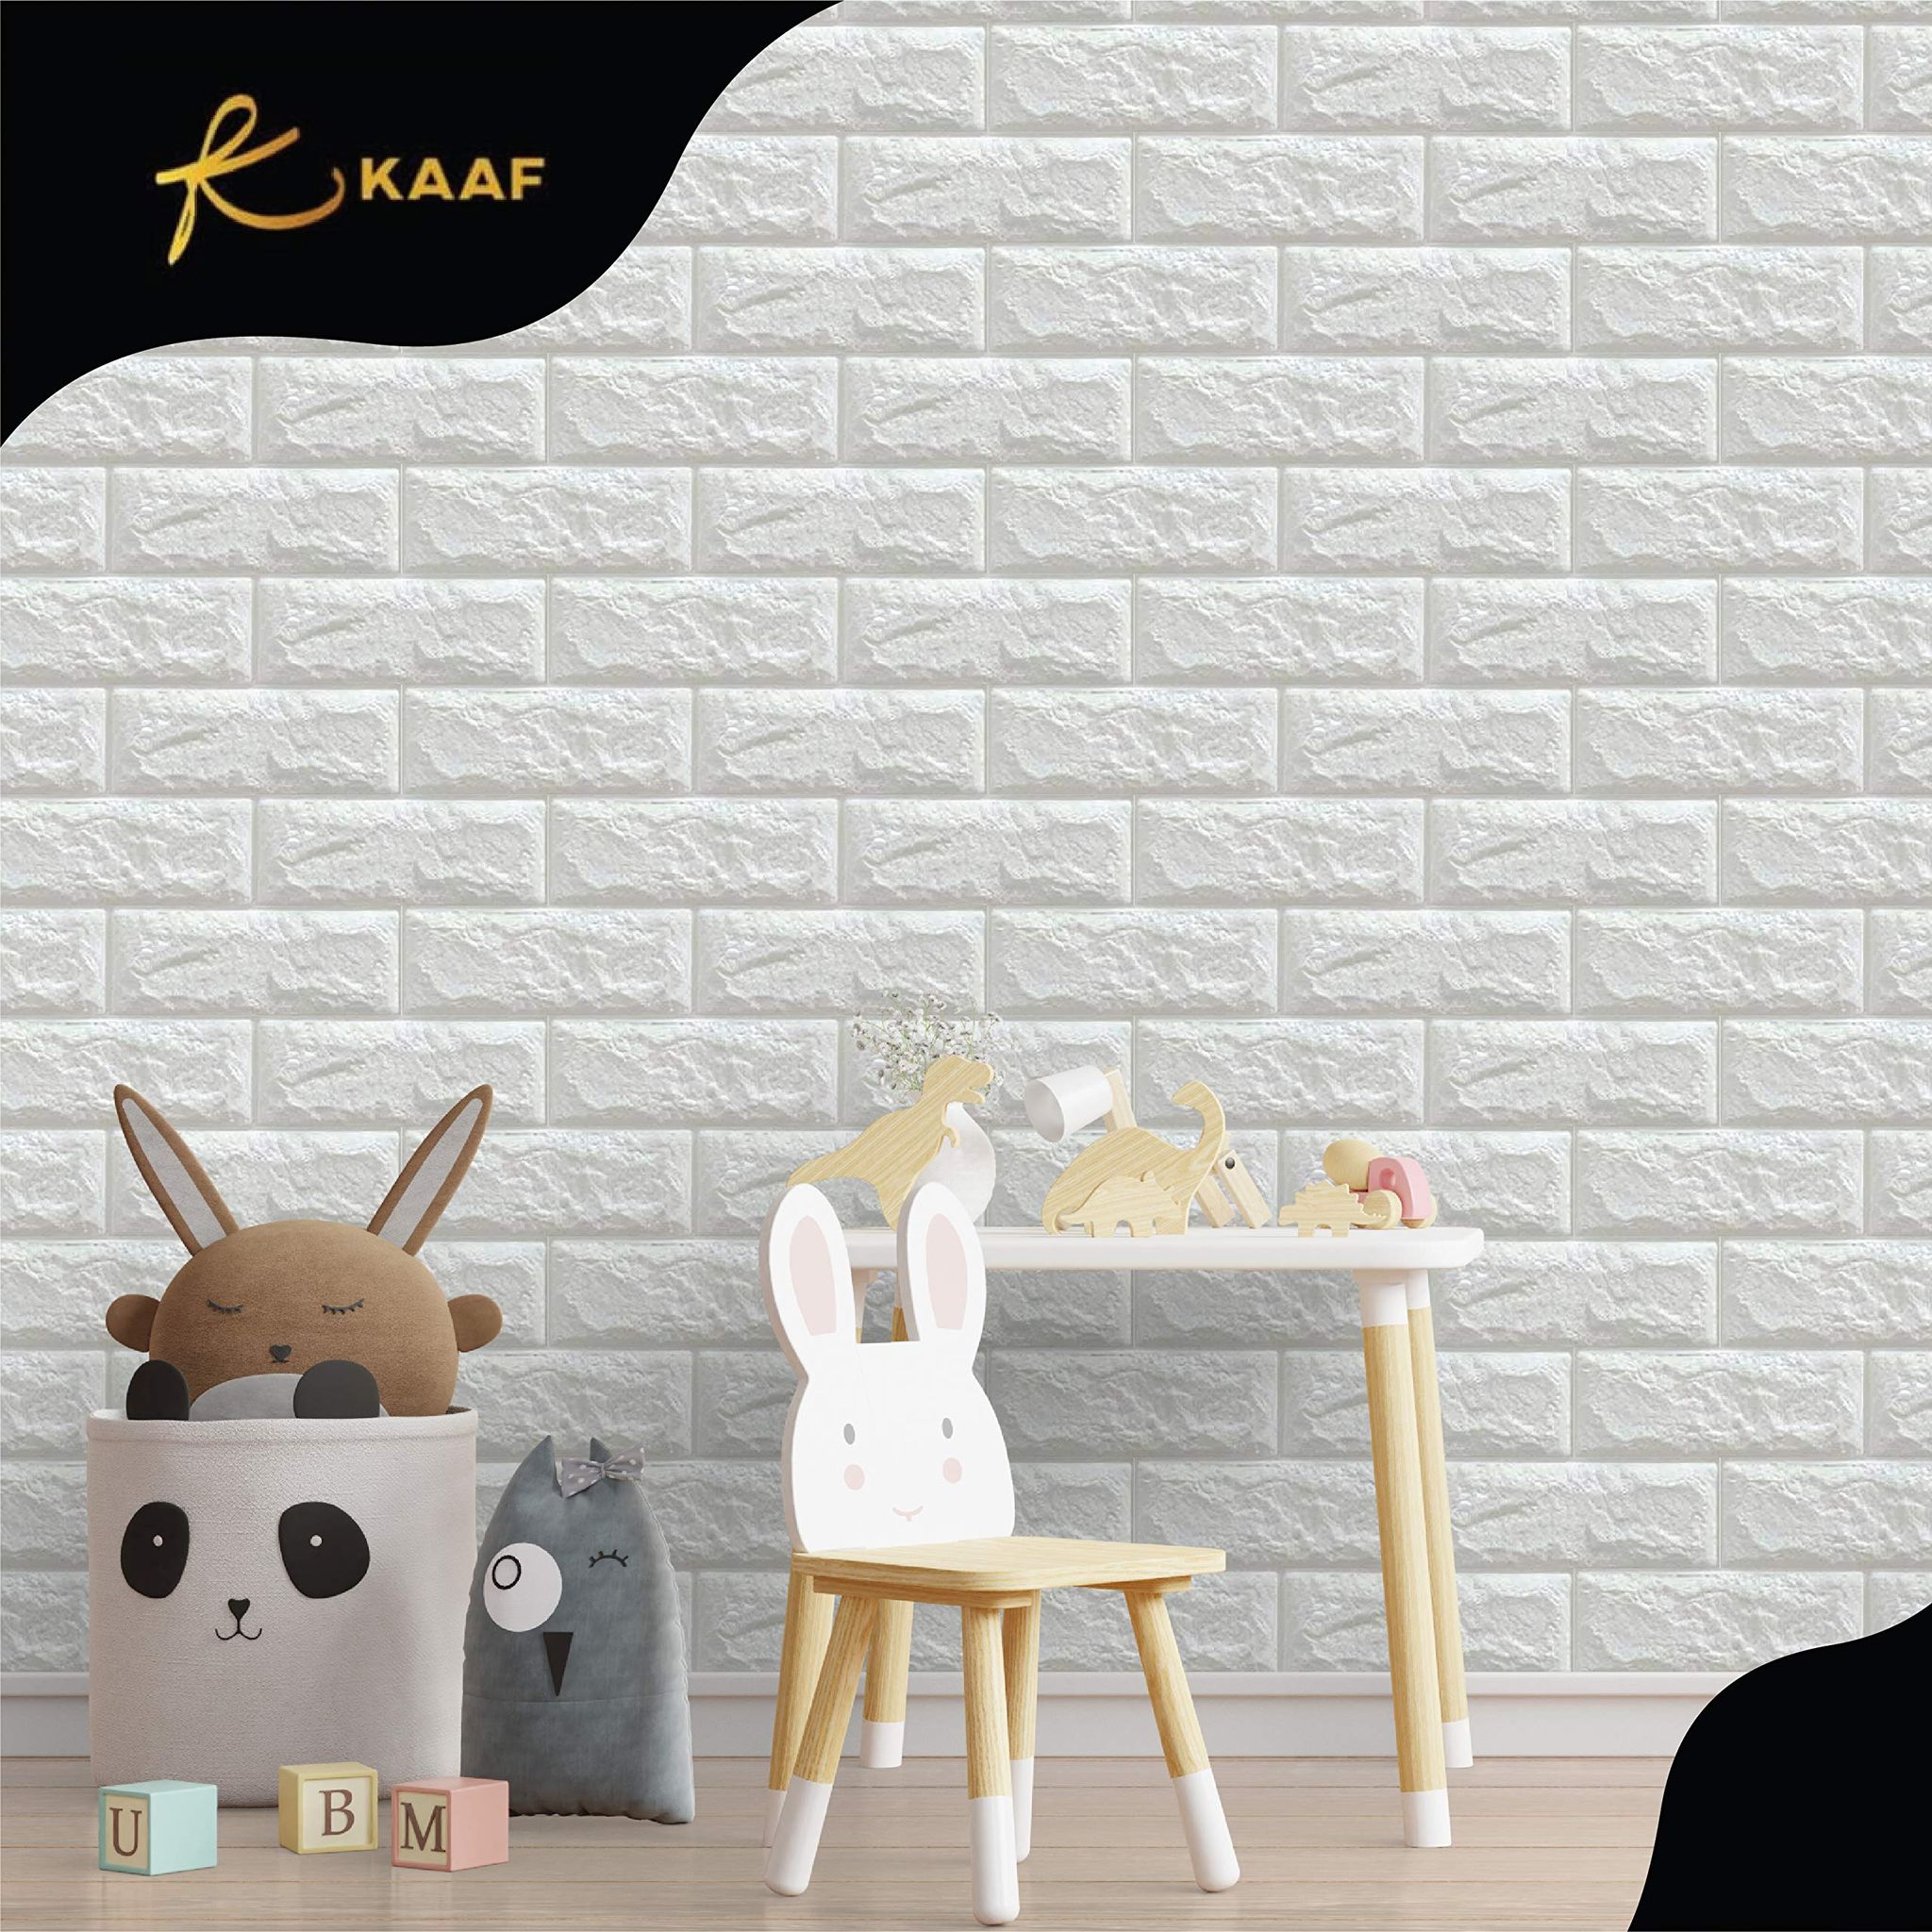 Kaaf 20 Pcs Wall Sticker - 3D Brick Wallpaper - Home Wall Decor Items - self Adhesive Wallpaper for Wall